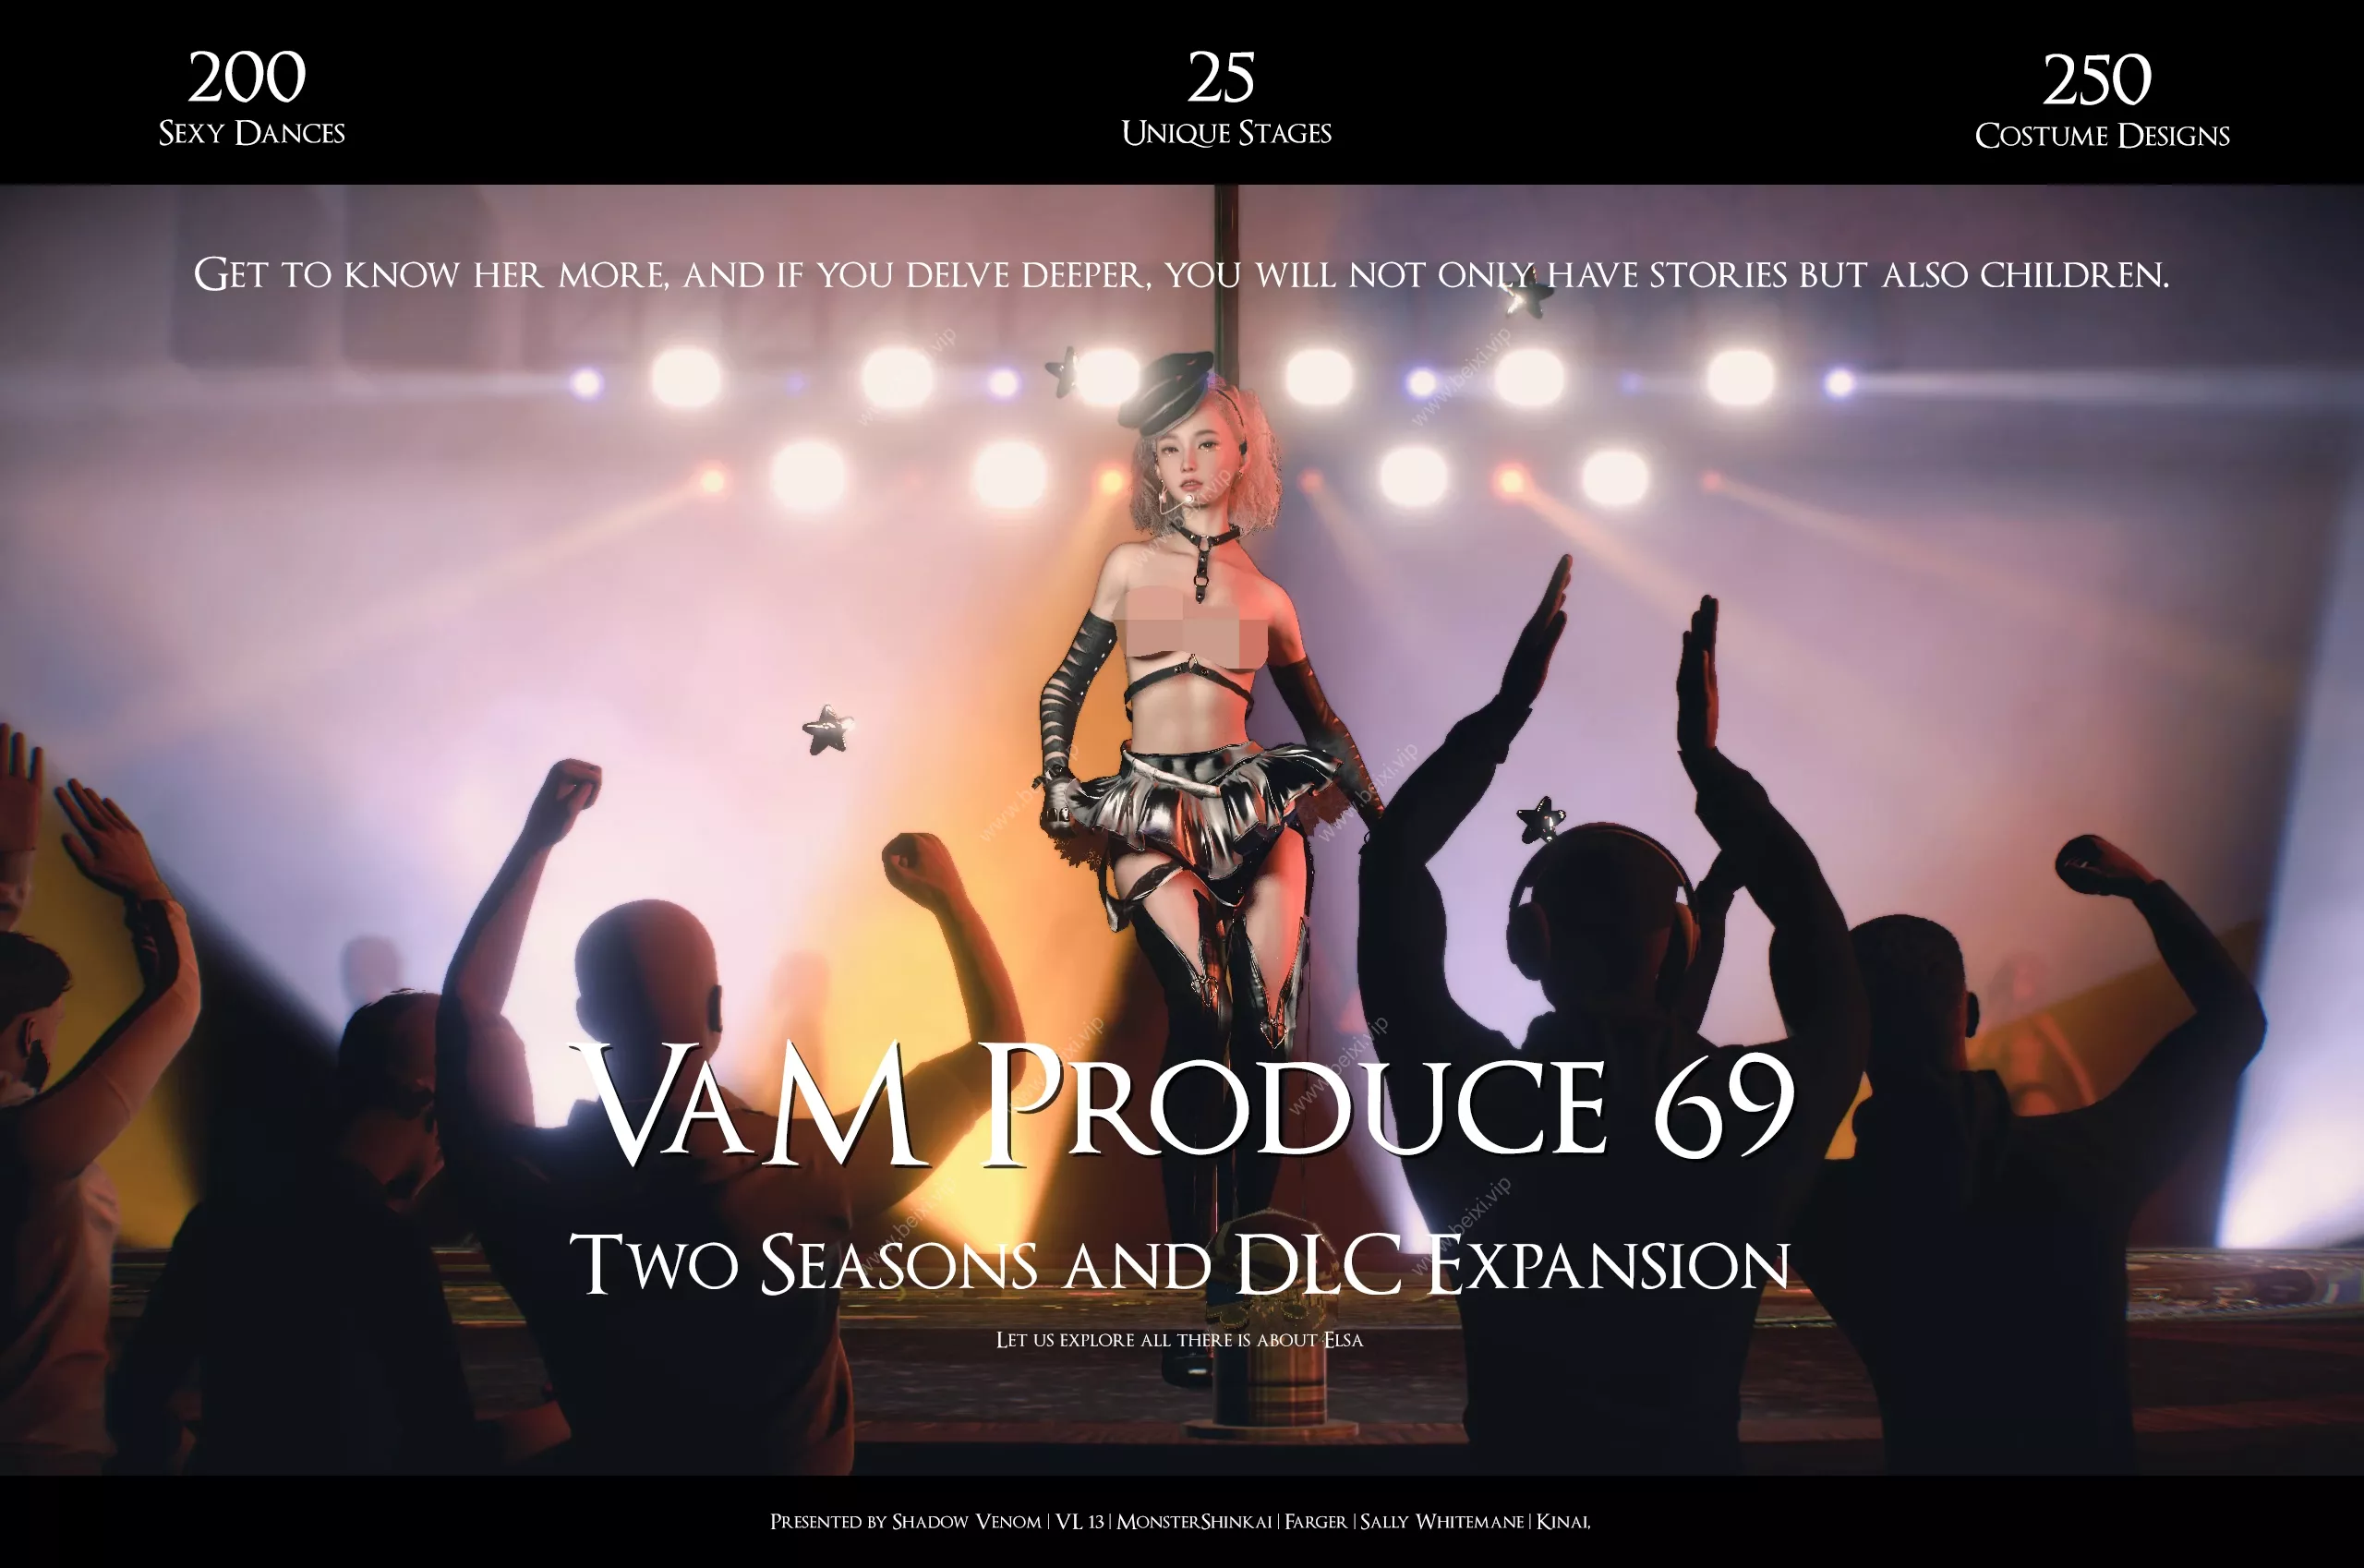 【精】【更新】VaM Produce 69 Two Seasons + DLC Expansion【文章篇幅比较大，请耐心等待加载！】